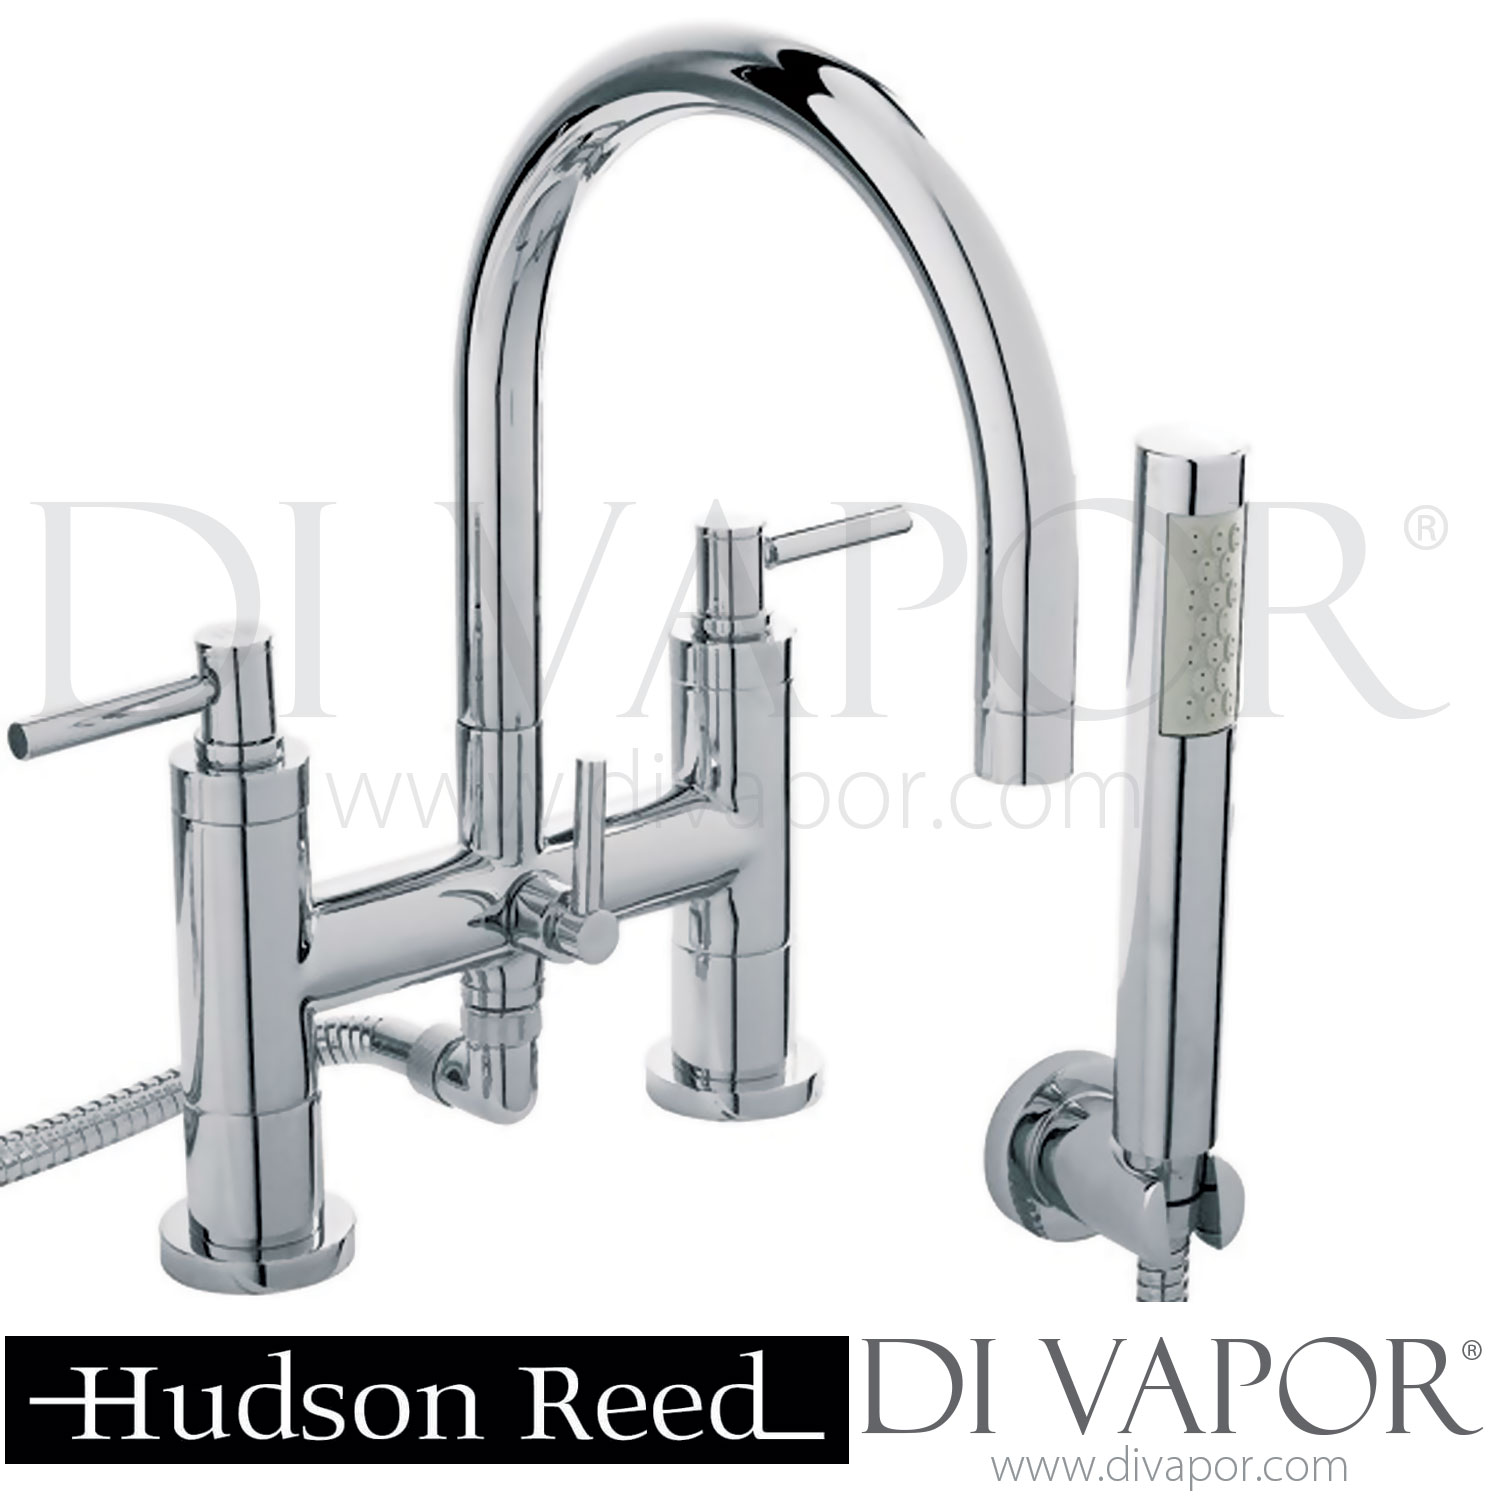 Hudson Reed TEL354 Tec Lever Bath Shower Mixer Chrome 